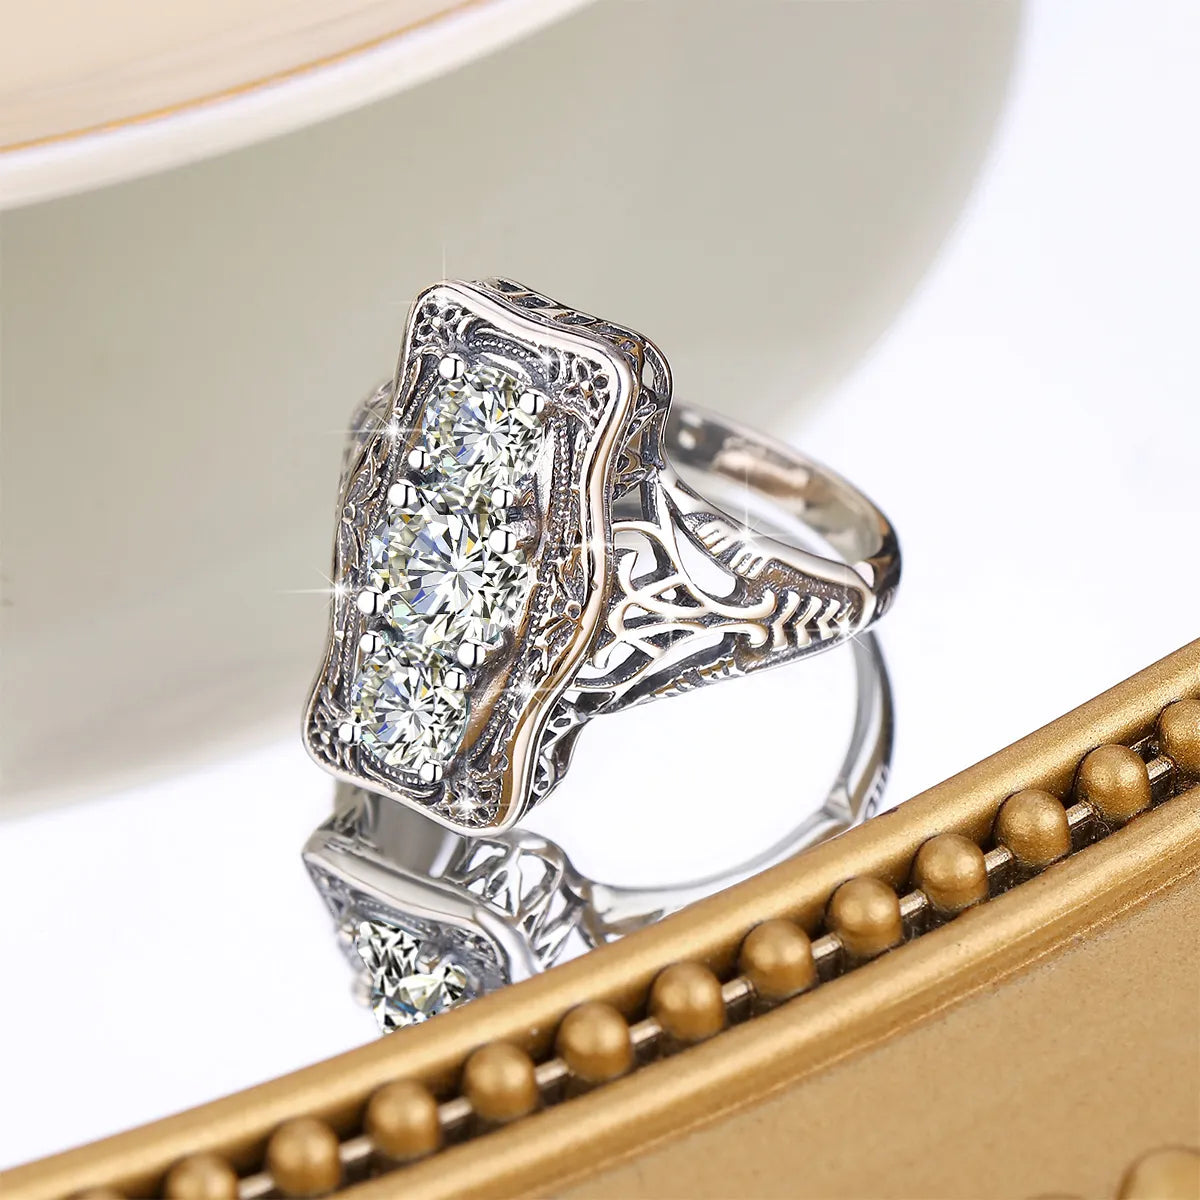 Unique 3 Stone Diamond Engagement Ring-Black Diamonds New York